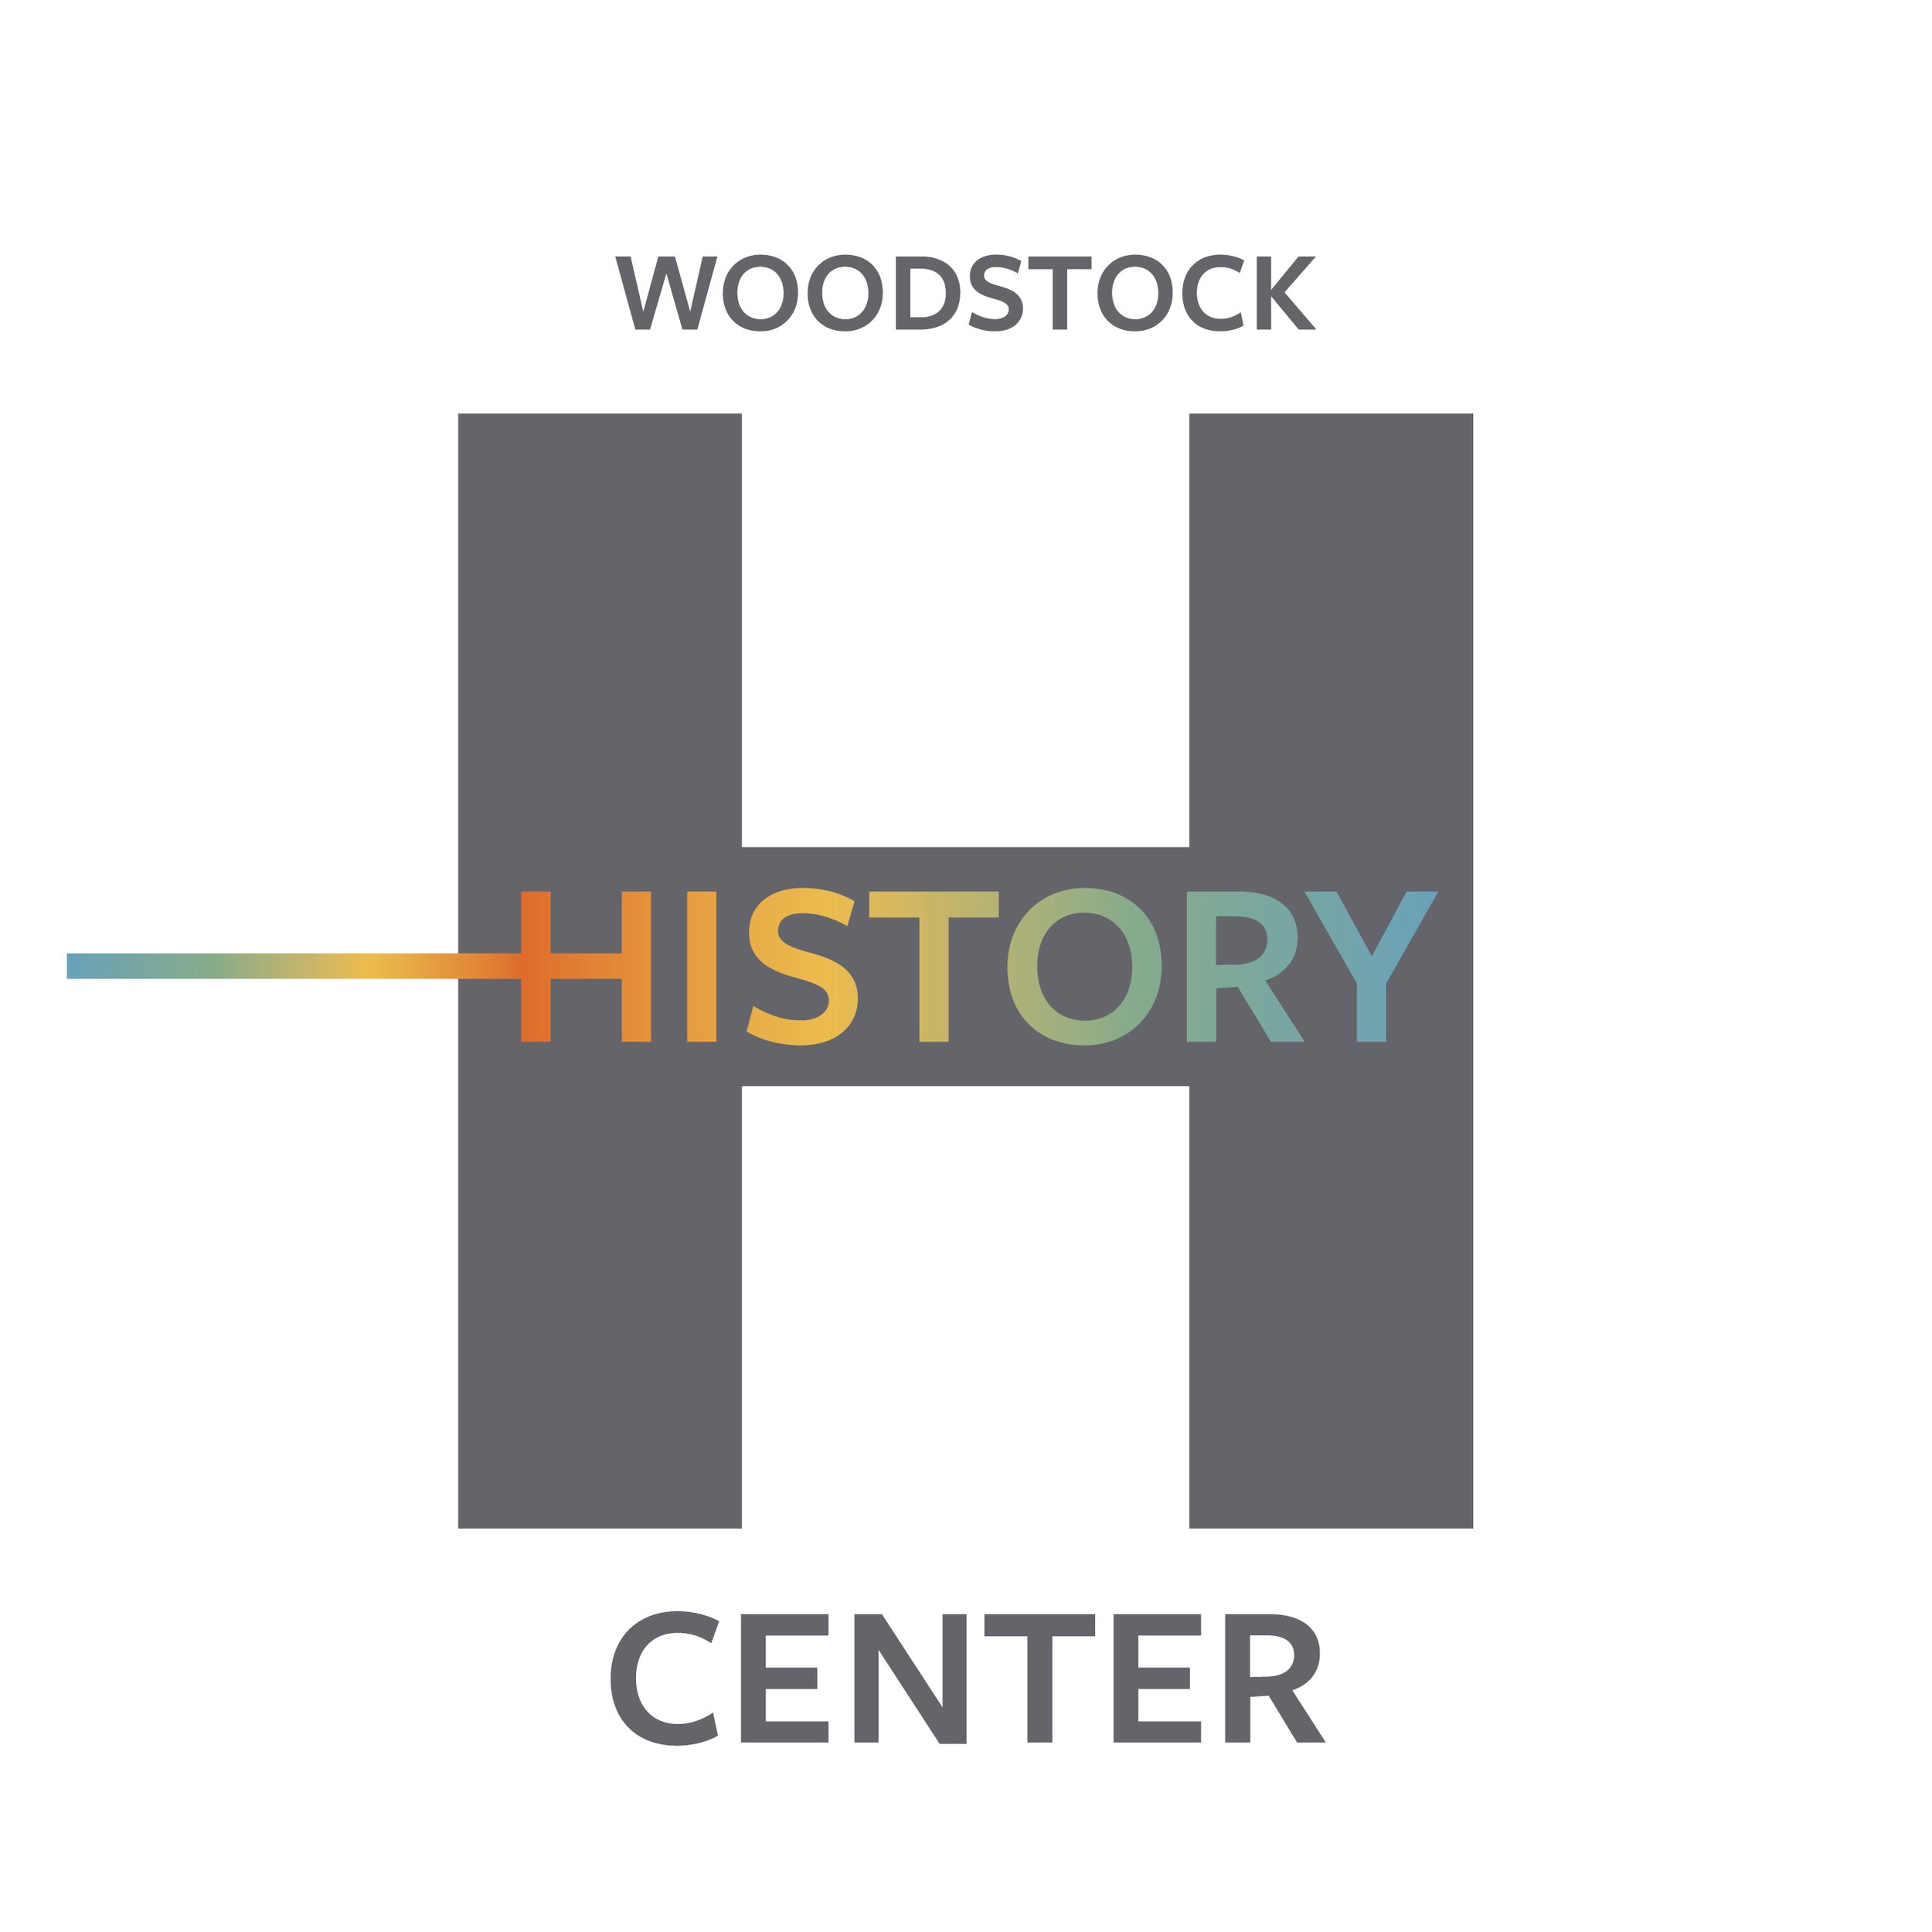 Woodstock History Center